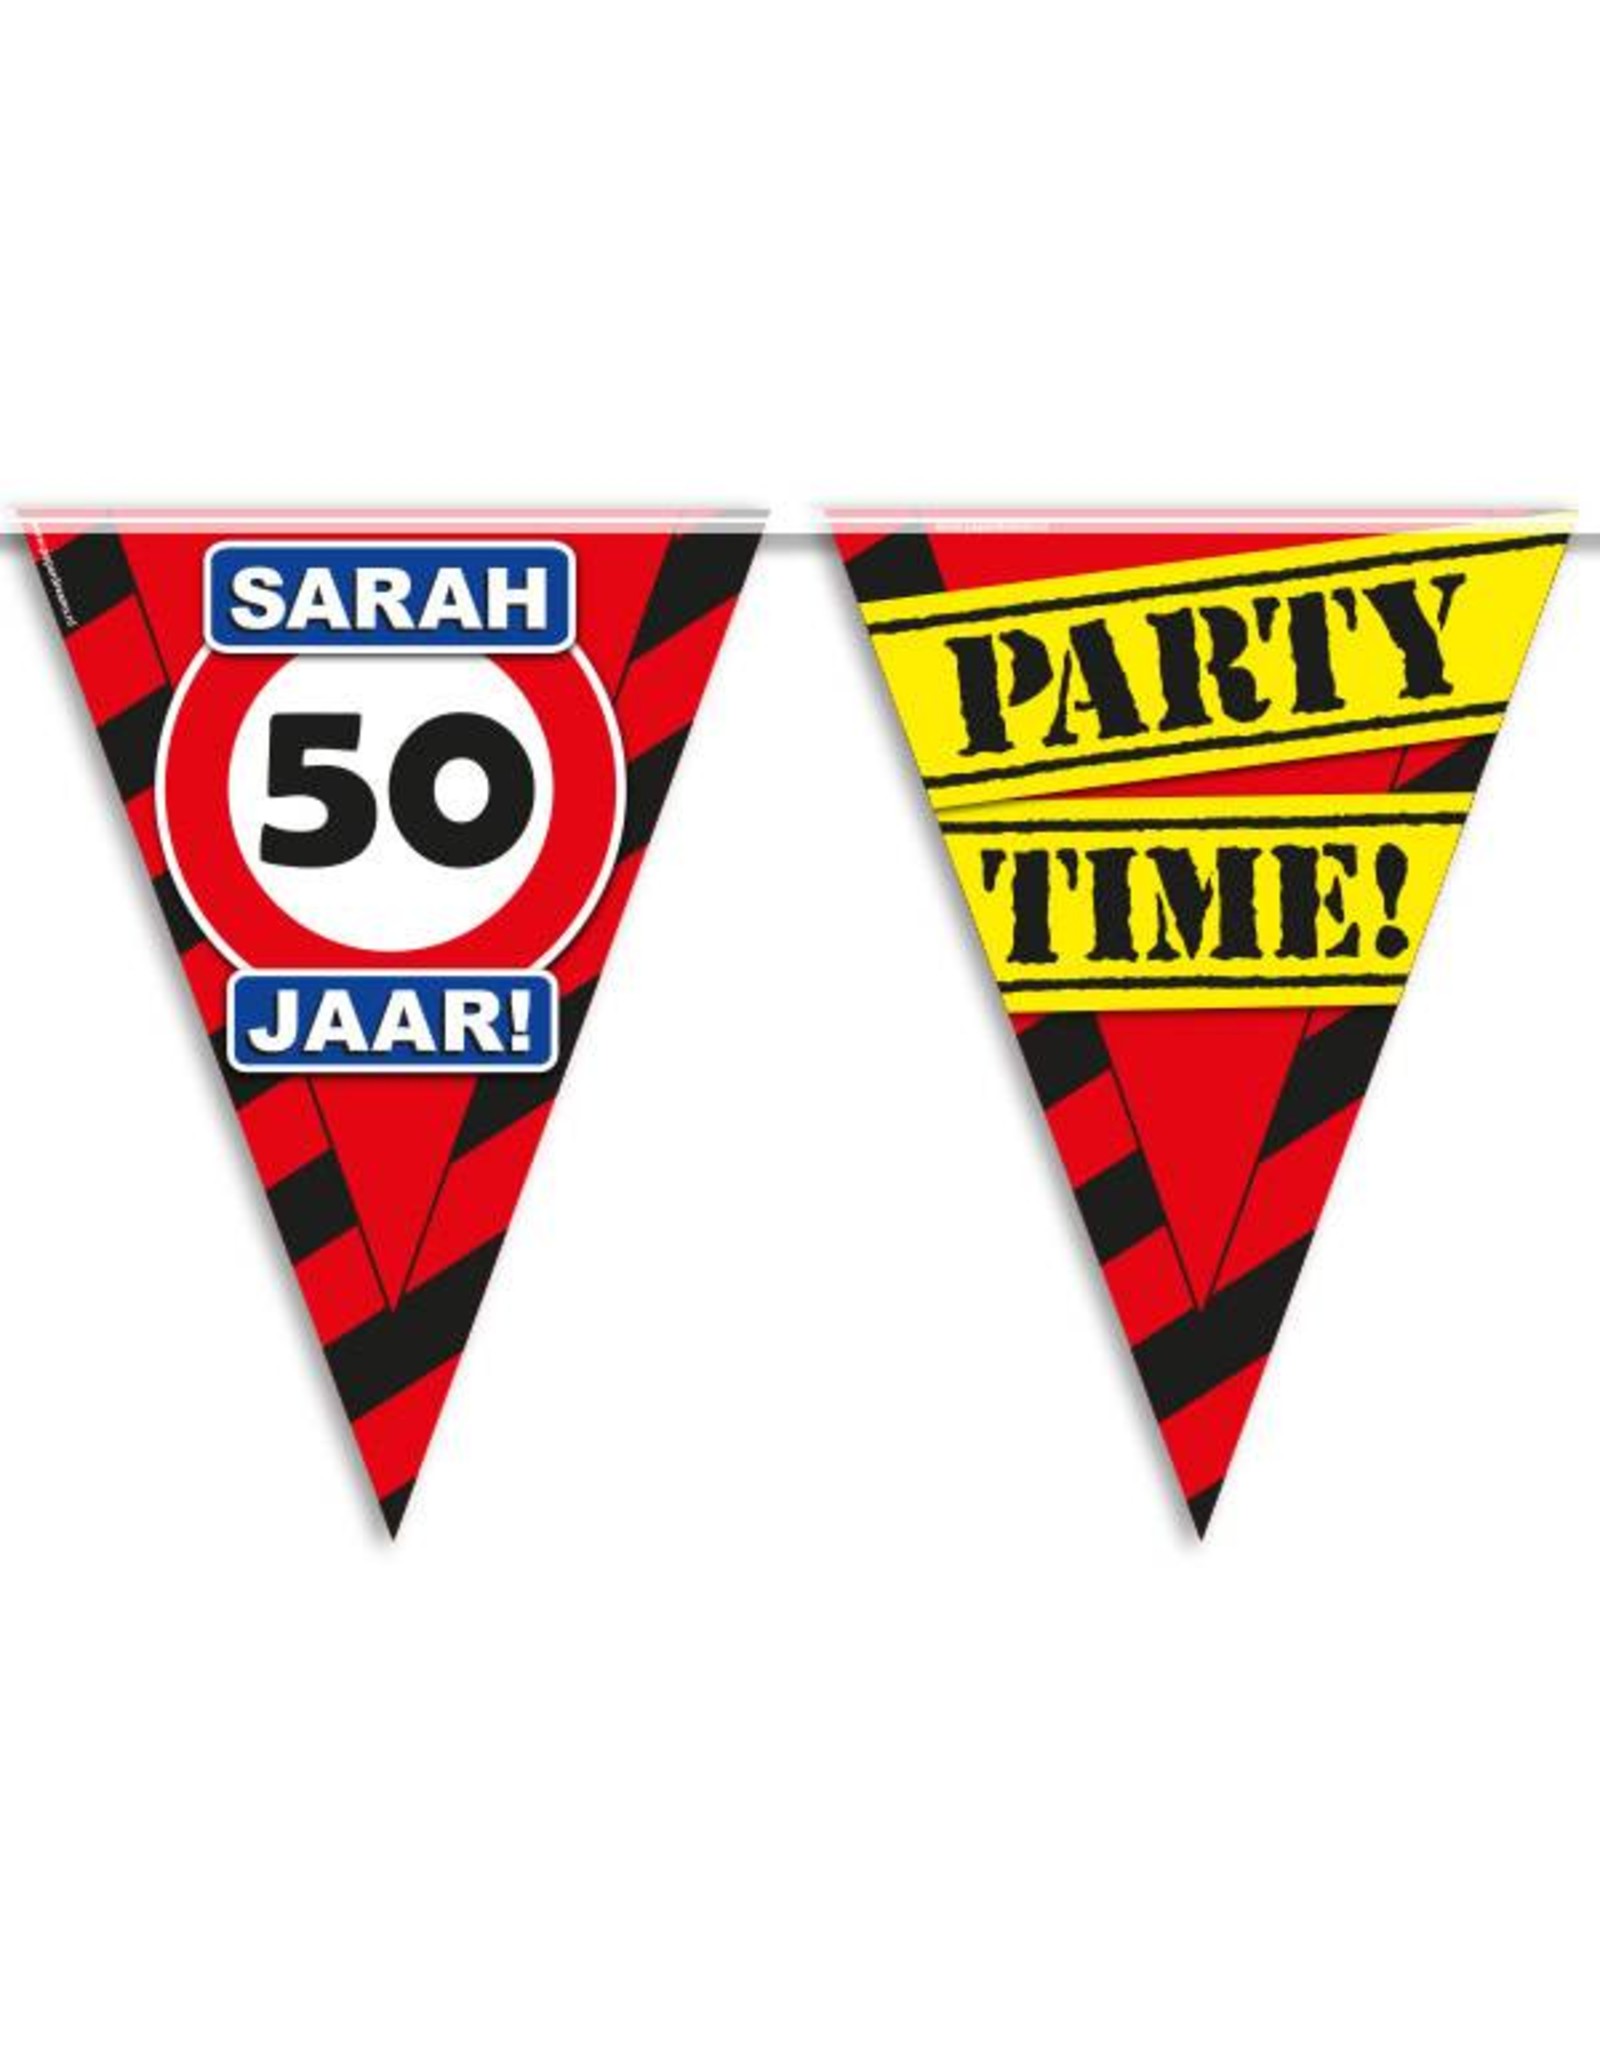 Party Vlaggen - Sarah